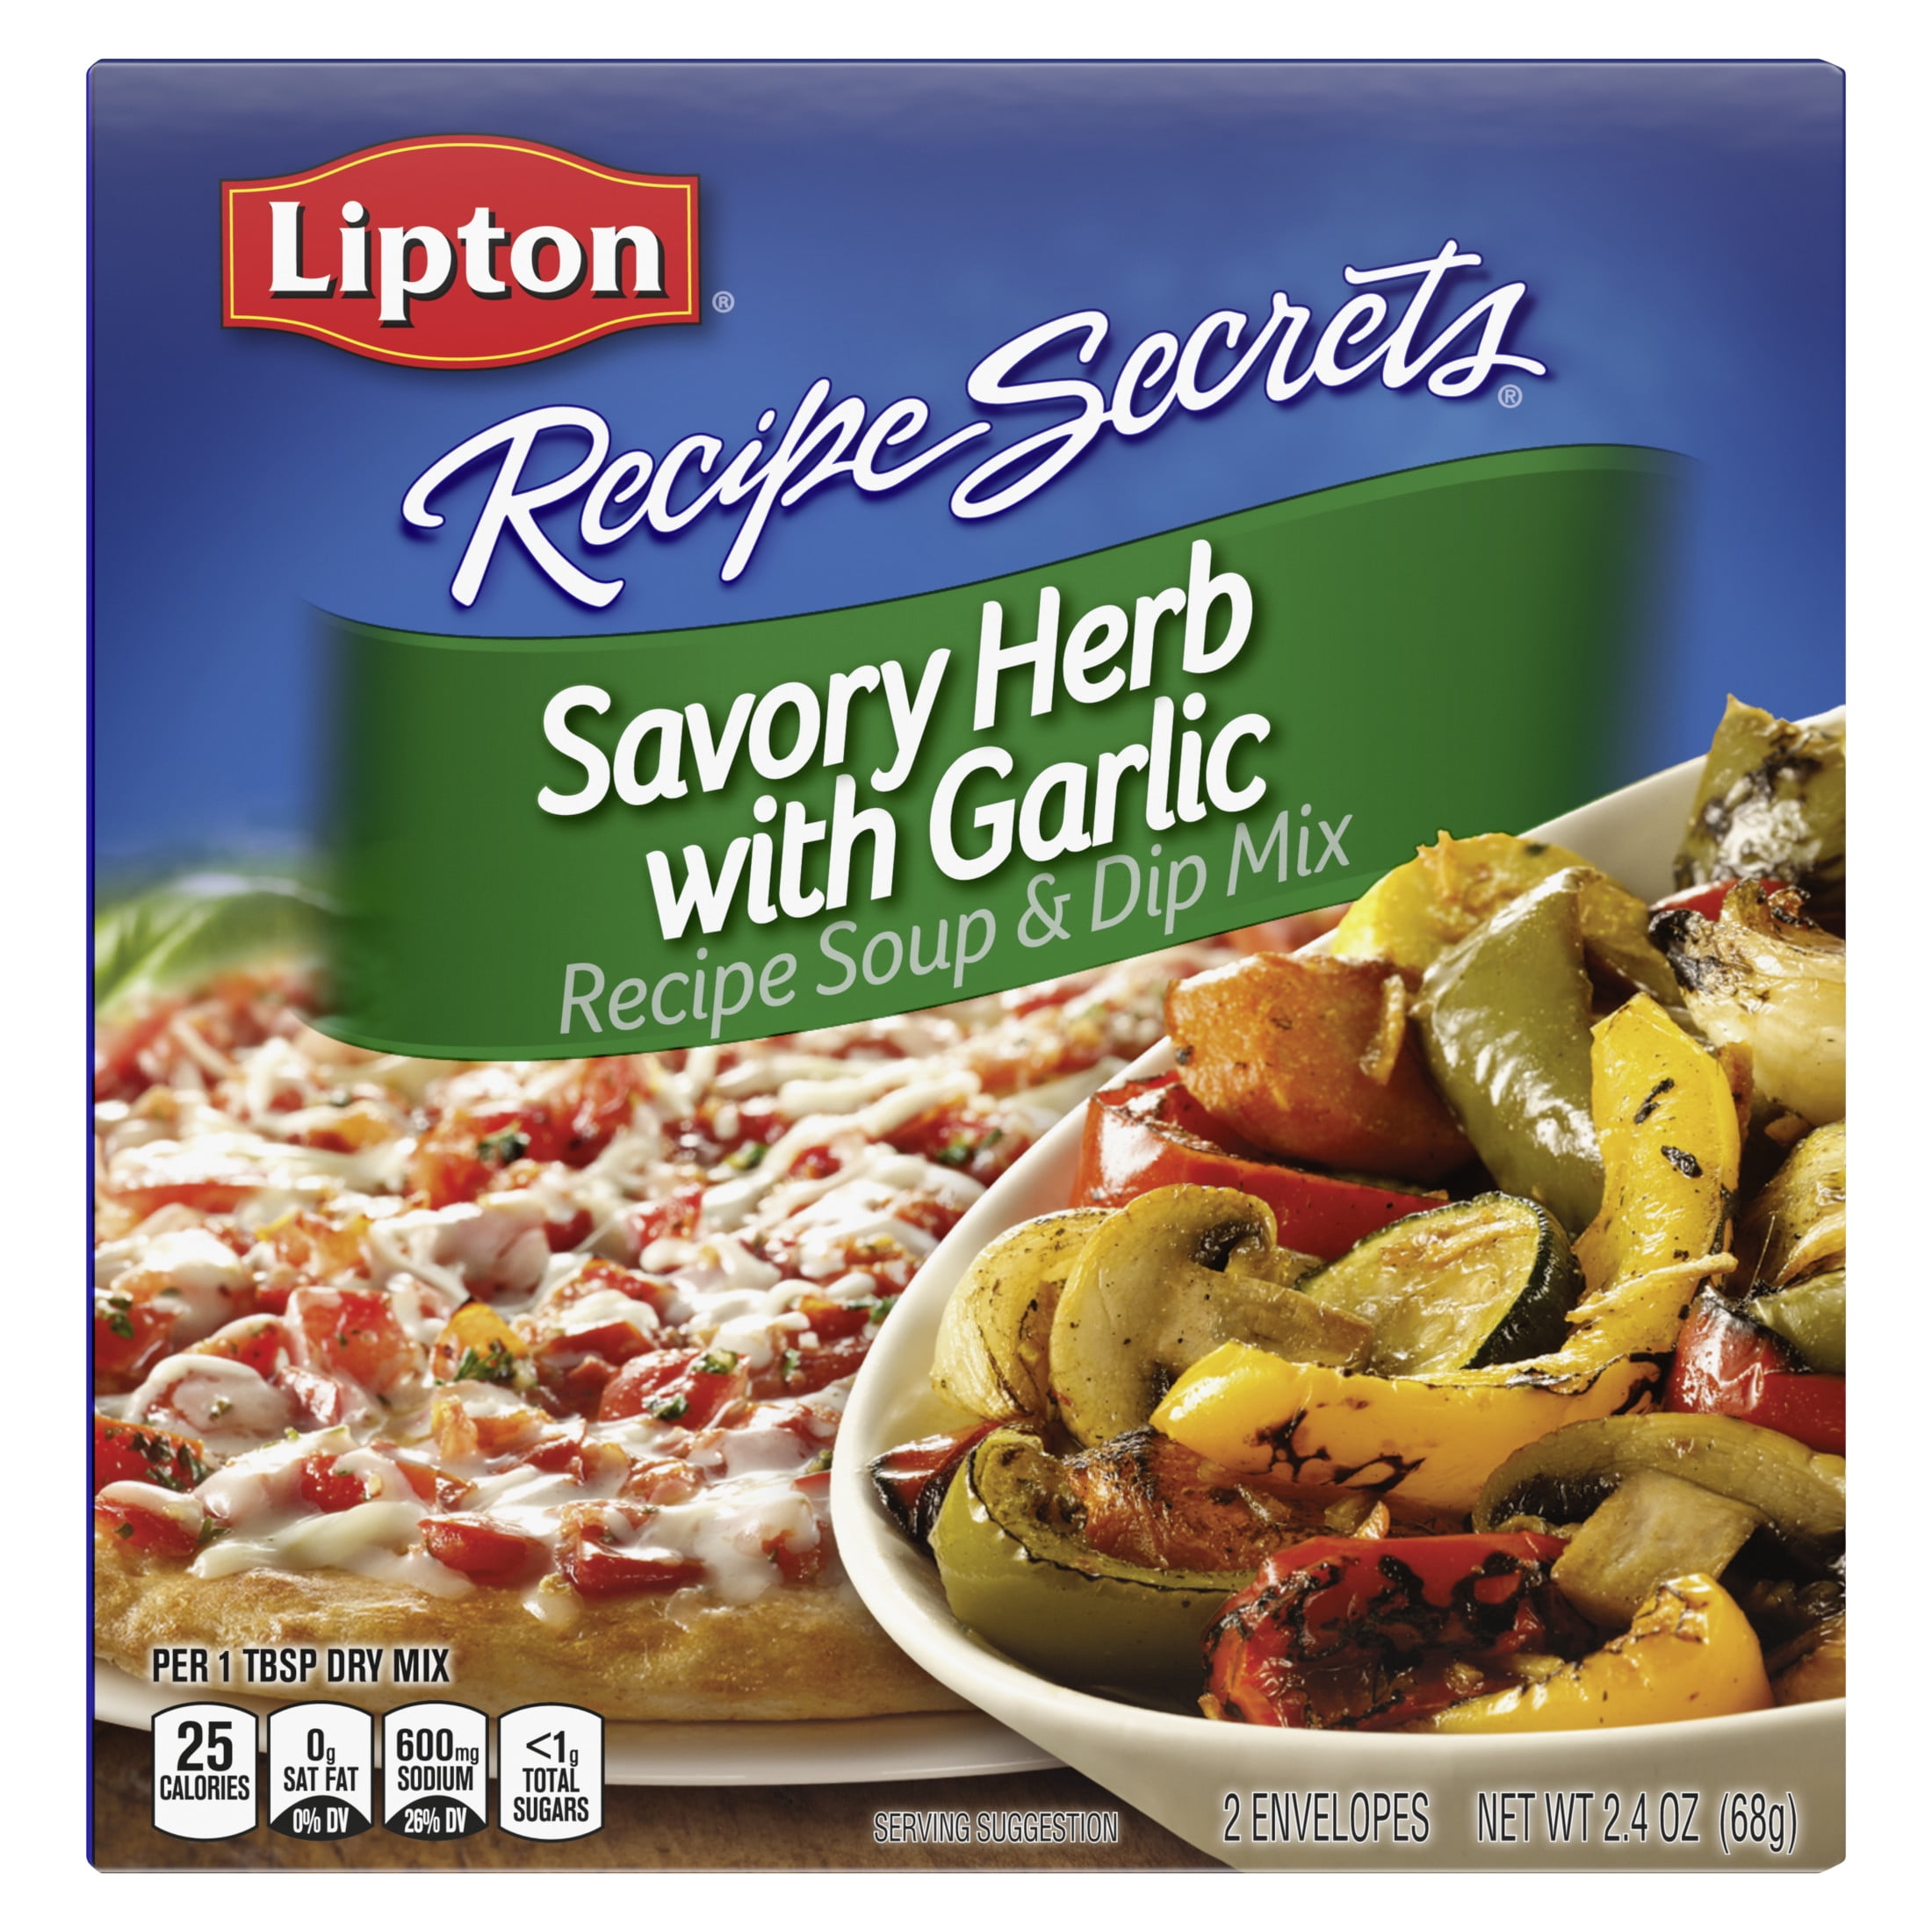 Lipton Recipe Secrets Soup and Dip Mix Savory Herb with Garlic